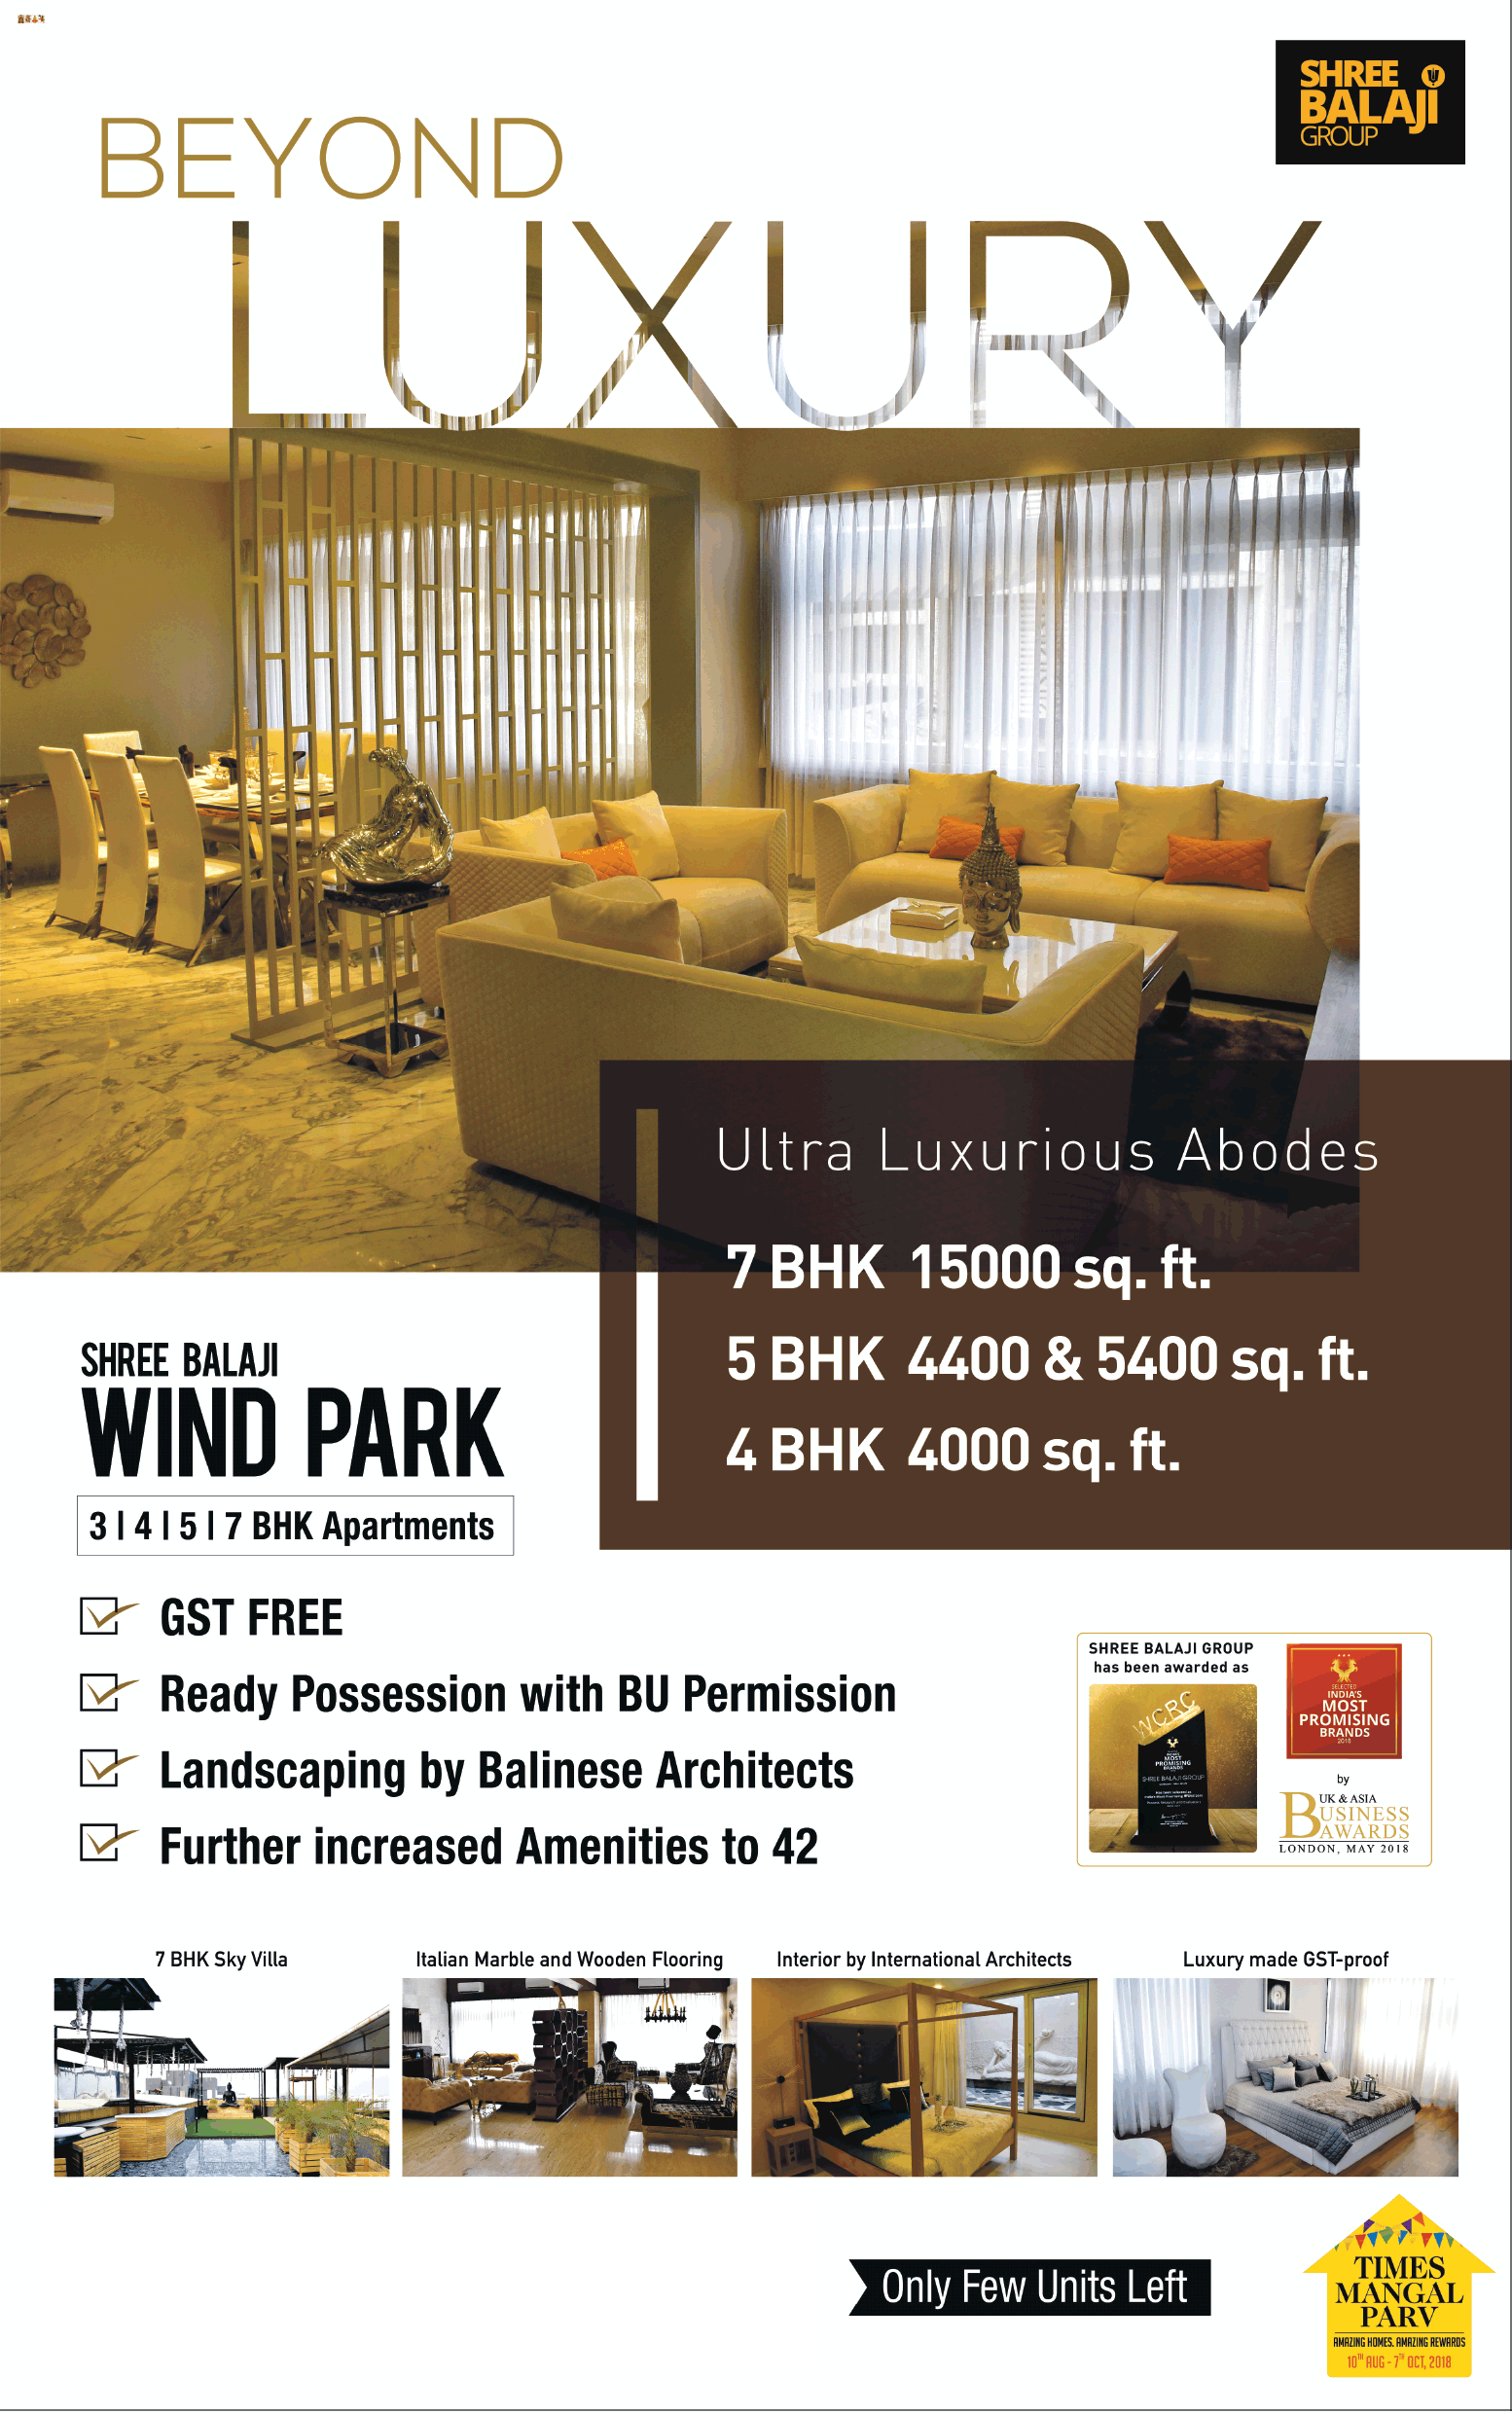 Book 3, 4, 5 & 7 bhk apartments at Shree Balaji Wind Park in Ahmedabad Update